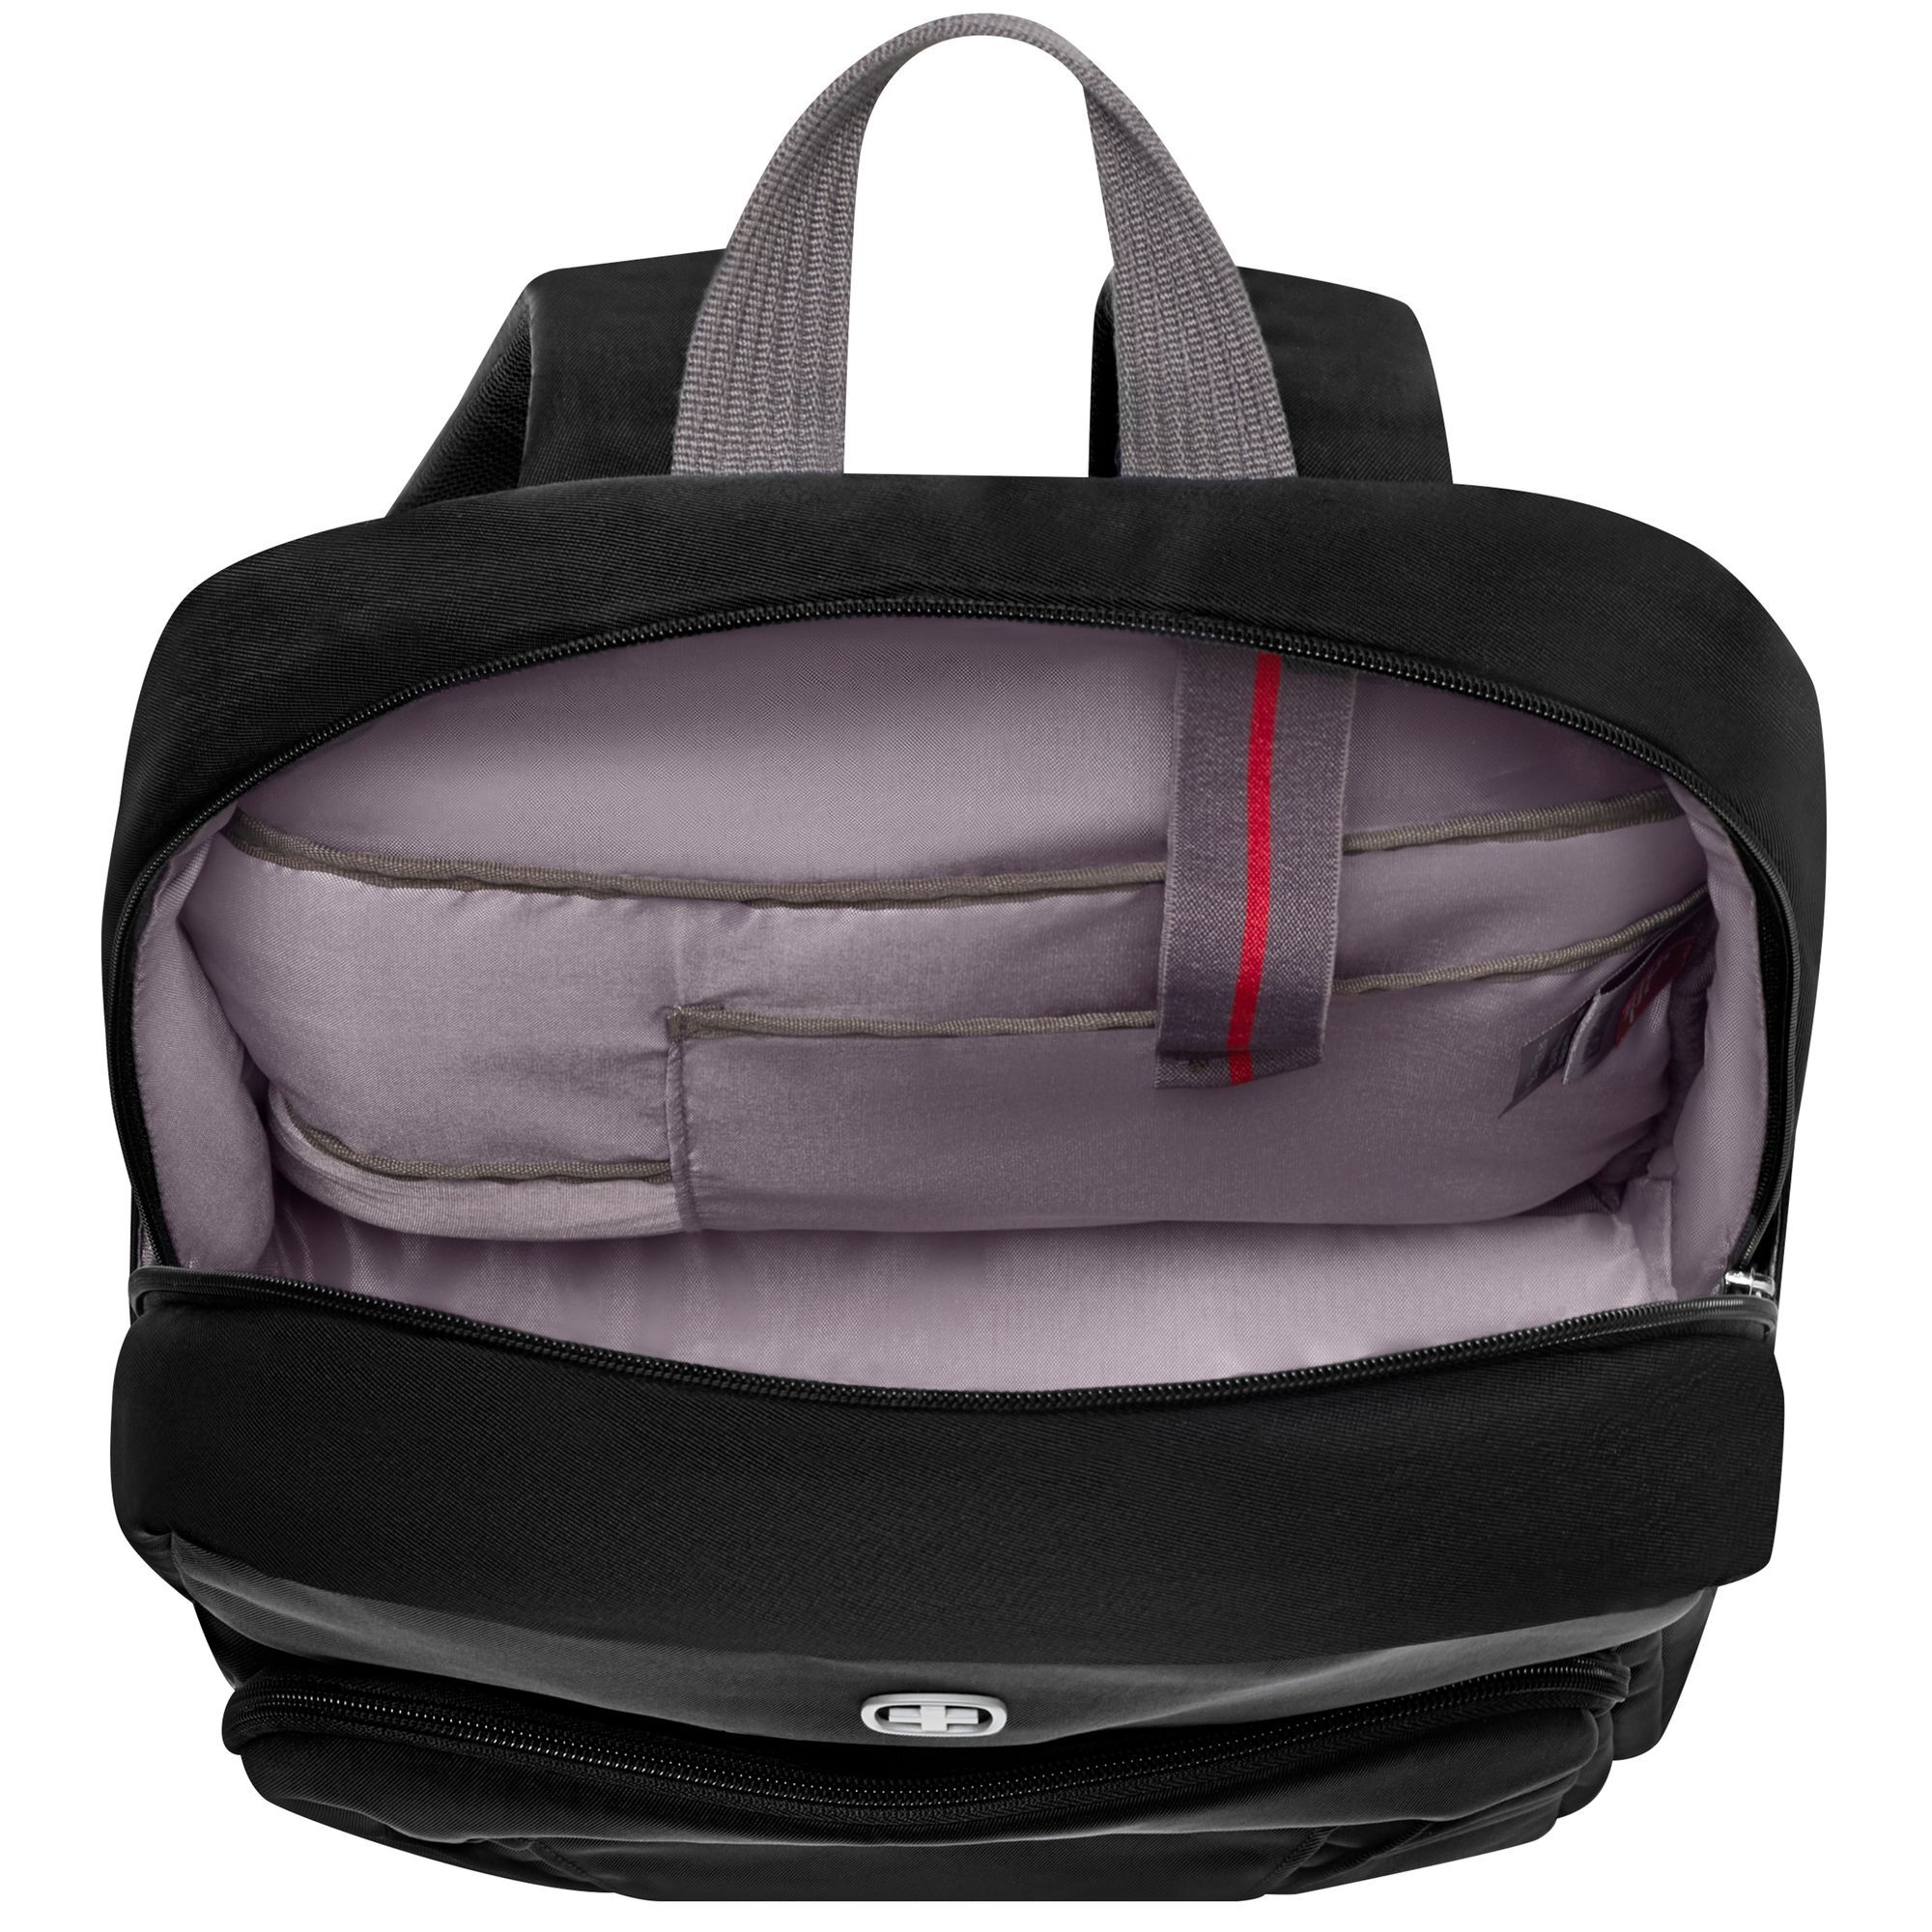 Рюкзак Wenger Motion 42 cm Laptopfach, шикарный черный рюкзак wenger trayl 45 cm laptopfach цвет gravity black